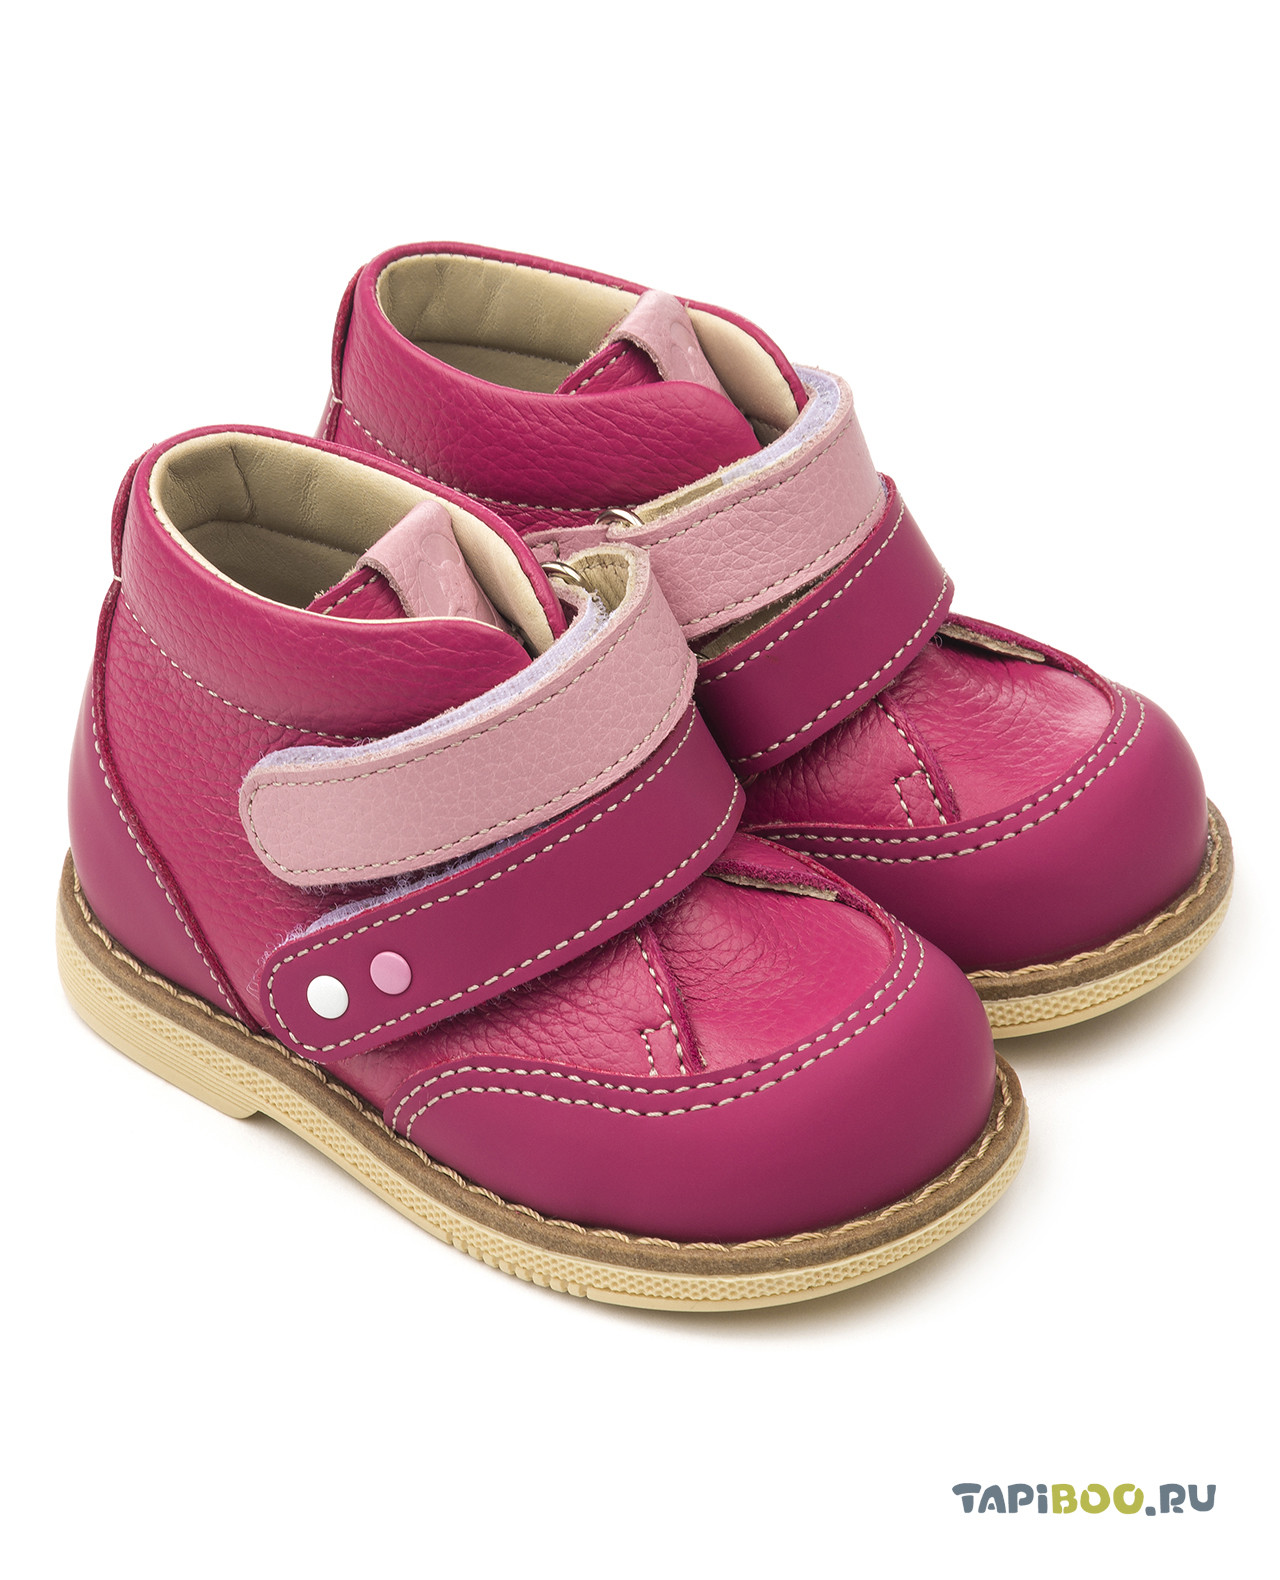 Ботинки детские Tapiboo ФУКСИЯ (73058, 25) ботинки детские tapiboo фуксия радуга 76488 25